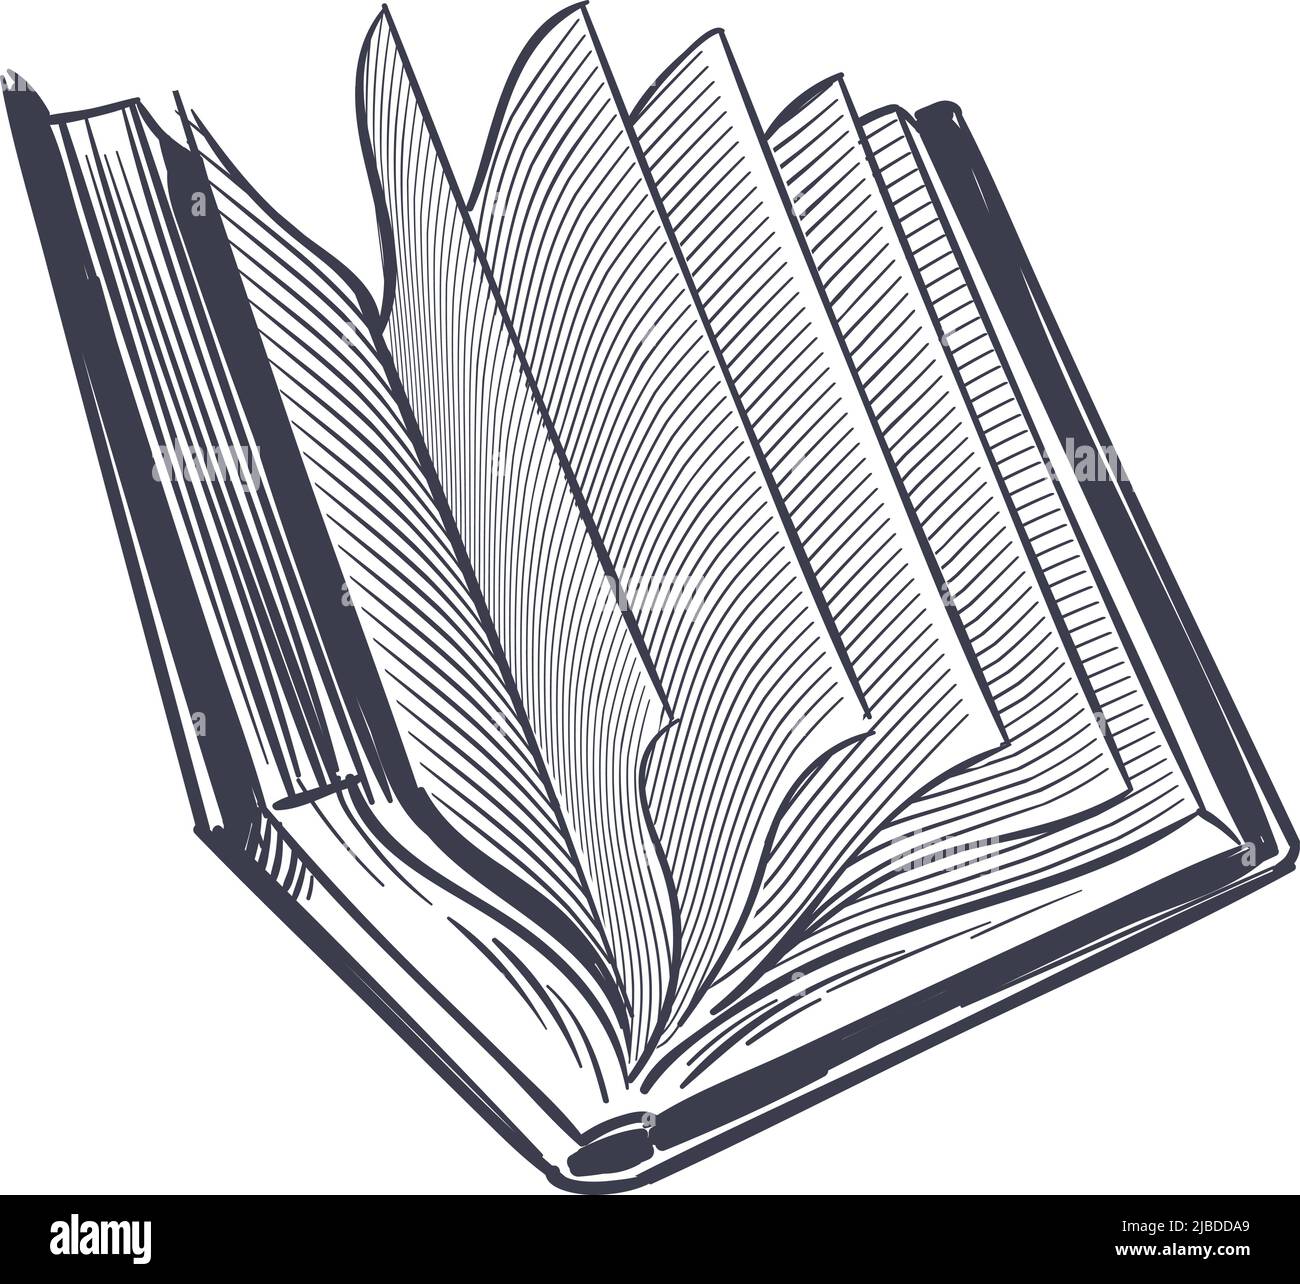 open book hand drawn sketch Stock Vector Image & Art - Alamy